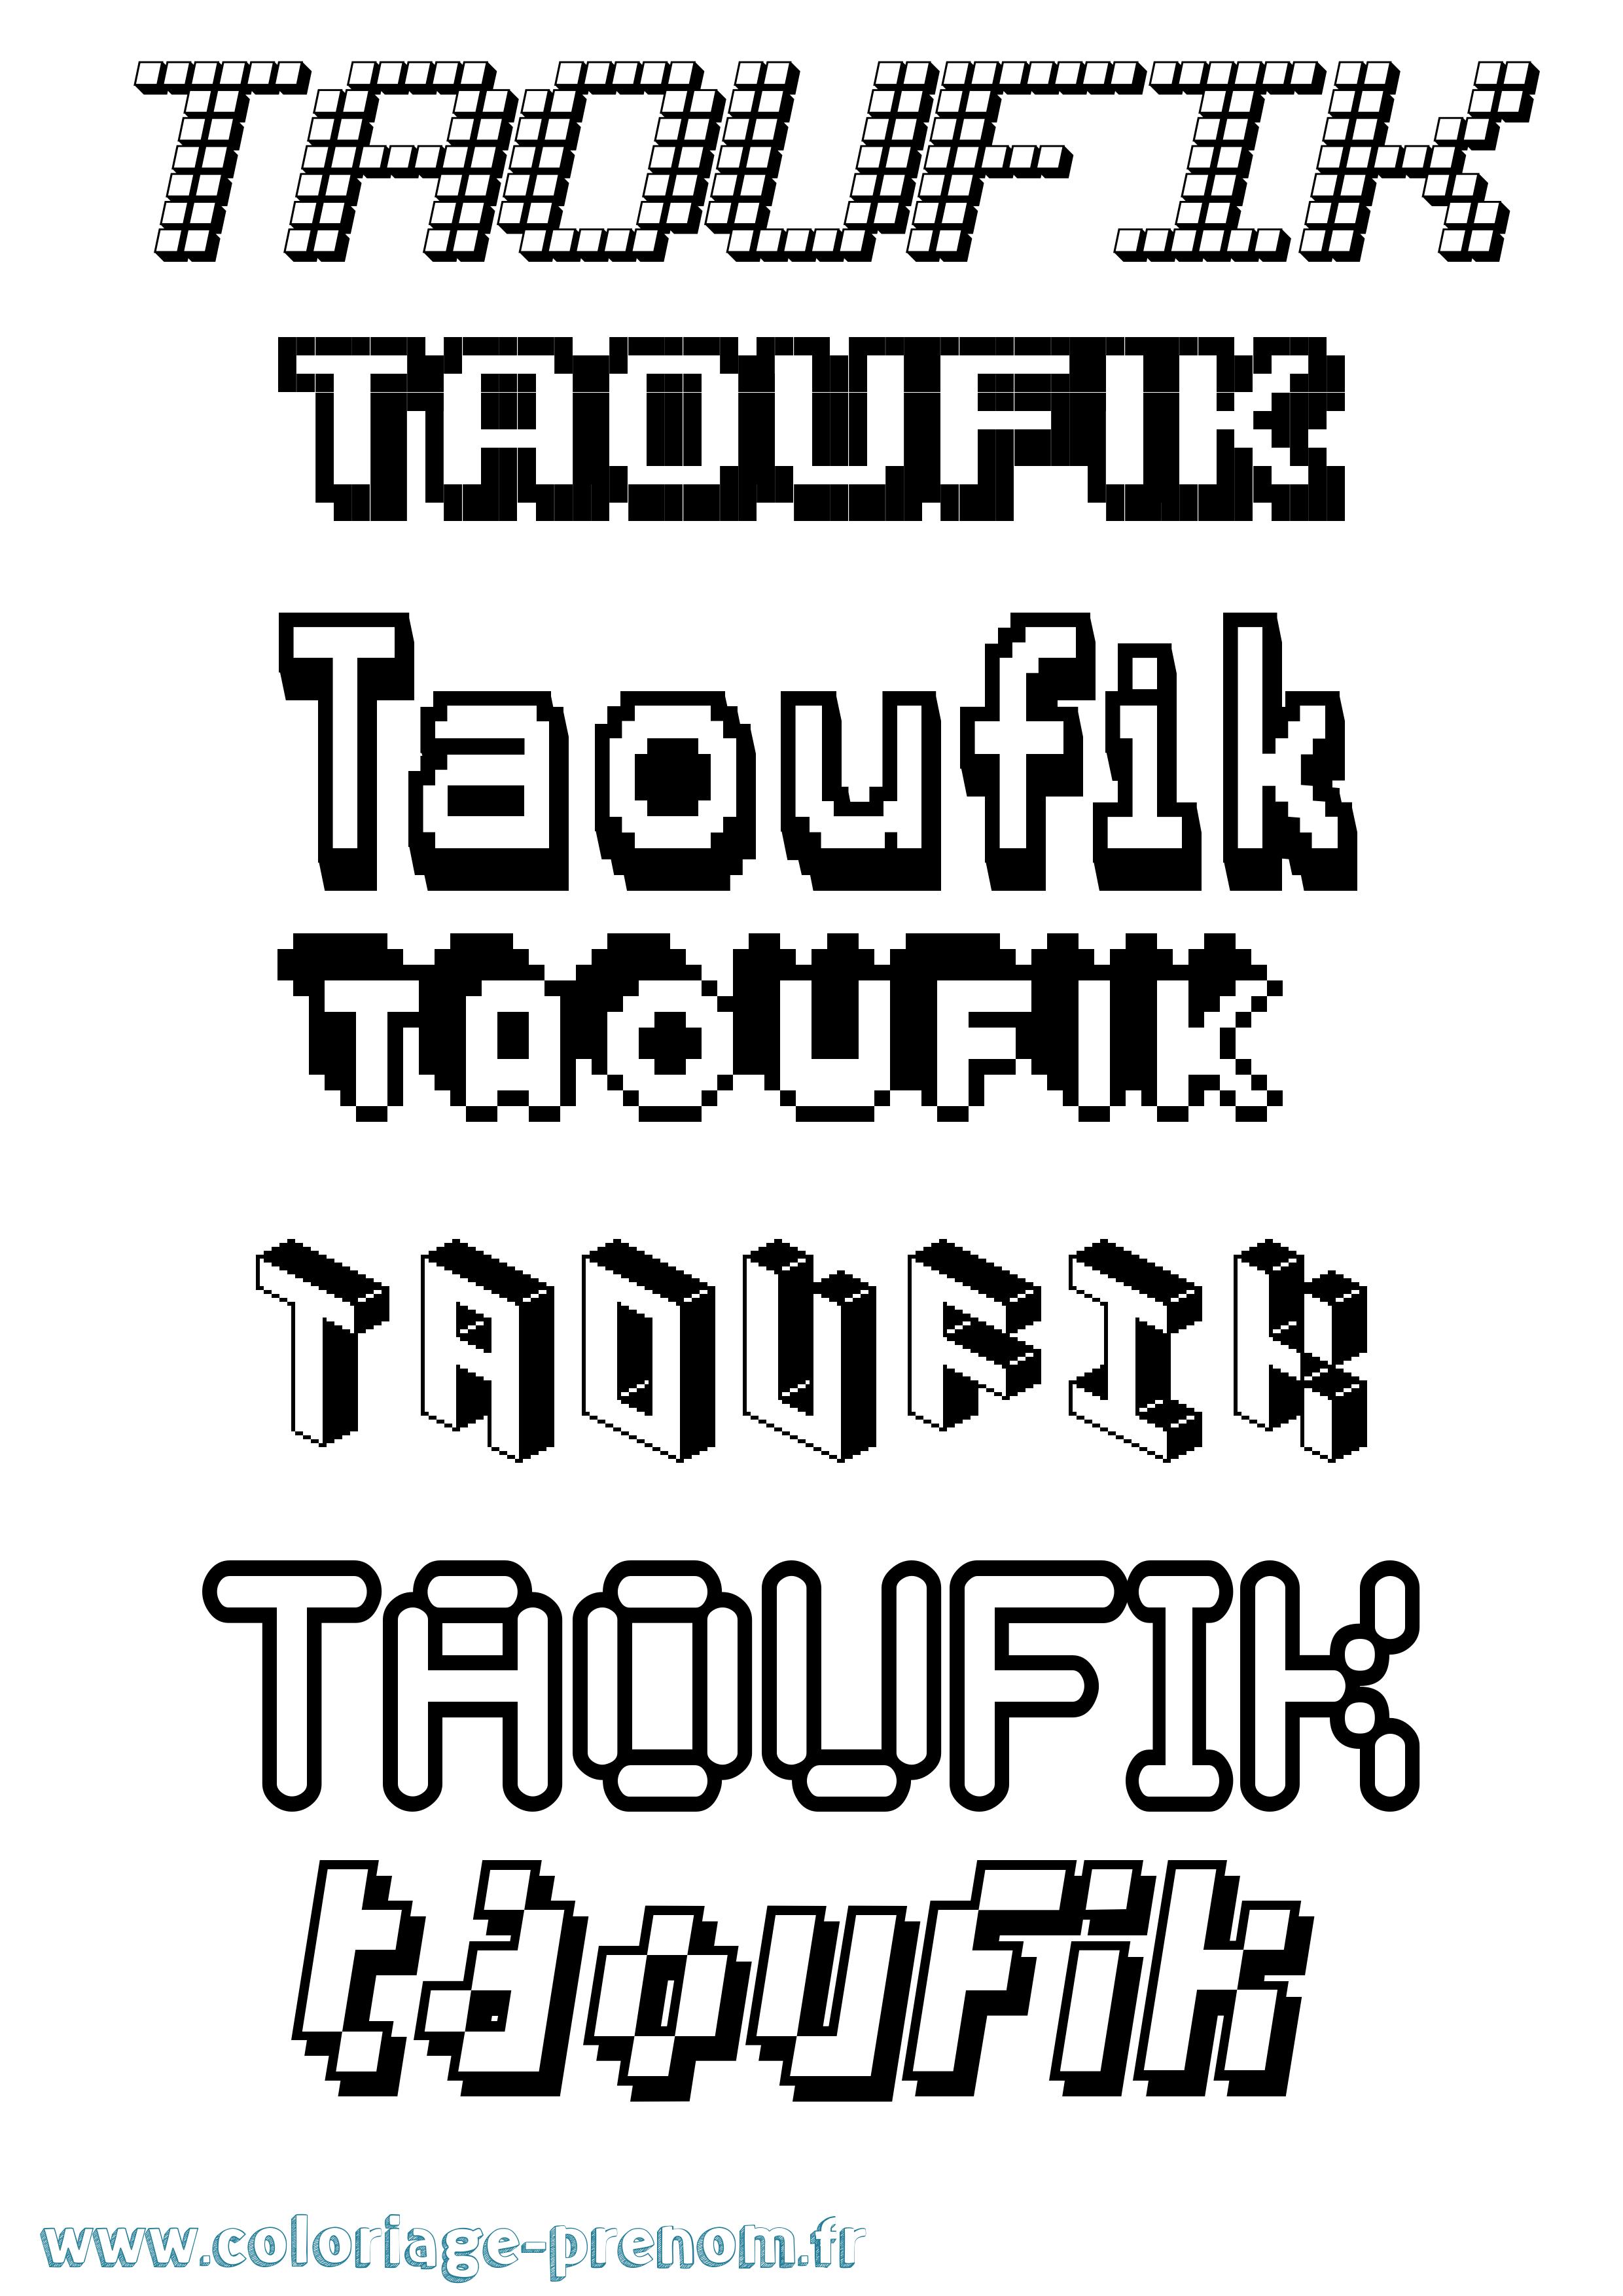 Coloriage prénom Taoufik Pixel